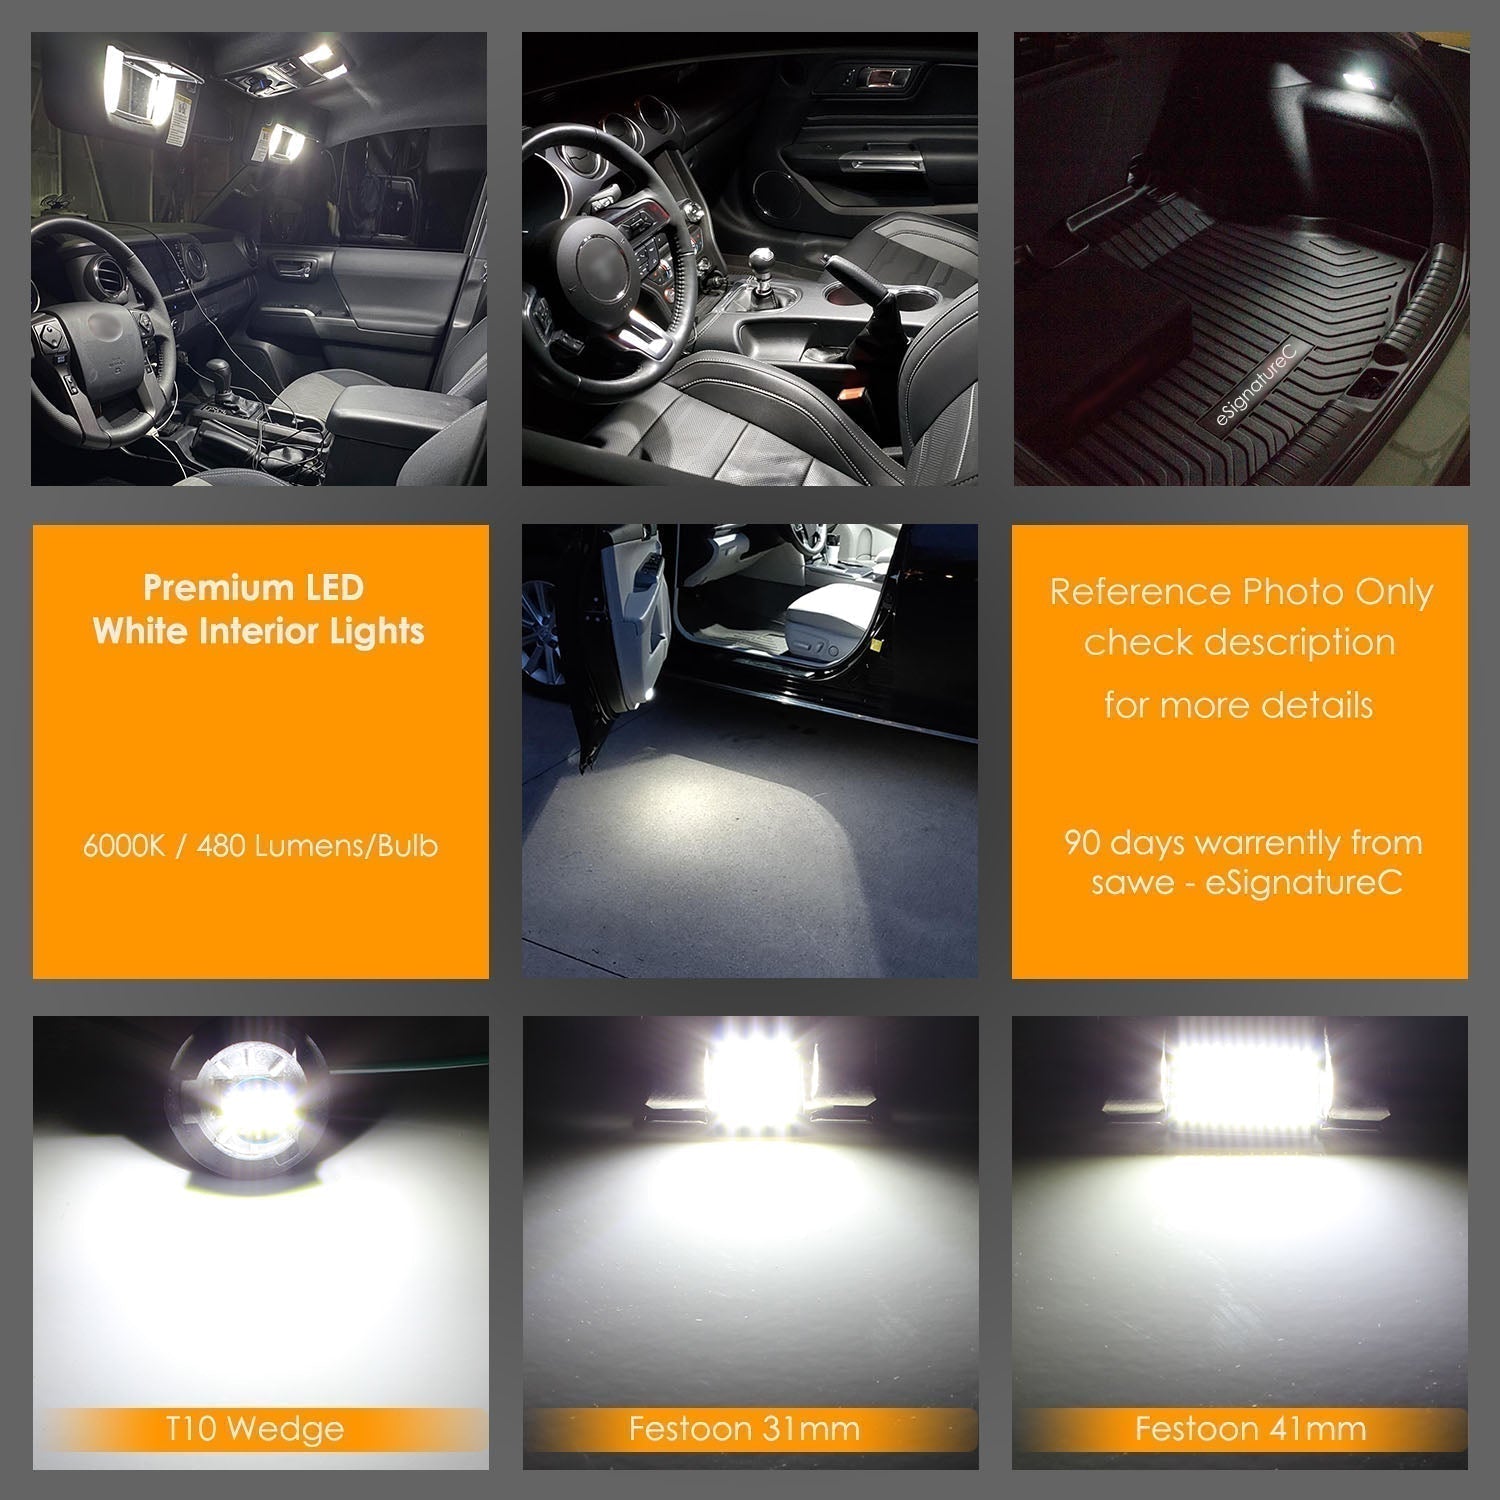 For Chevrolet Impala Interior LED Lights - Dome & Map Lights Package Kit for 2000 - 2005 - White